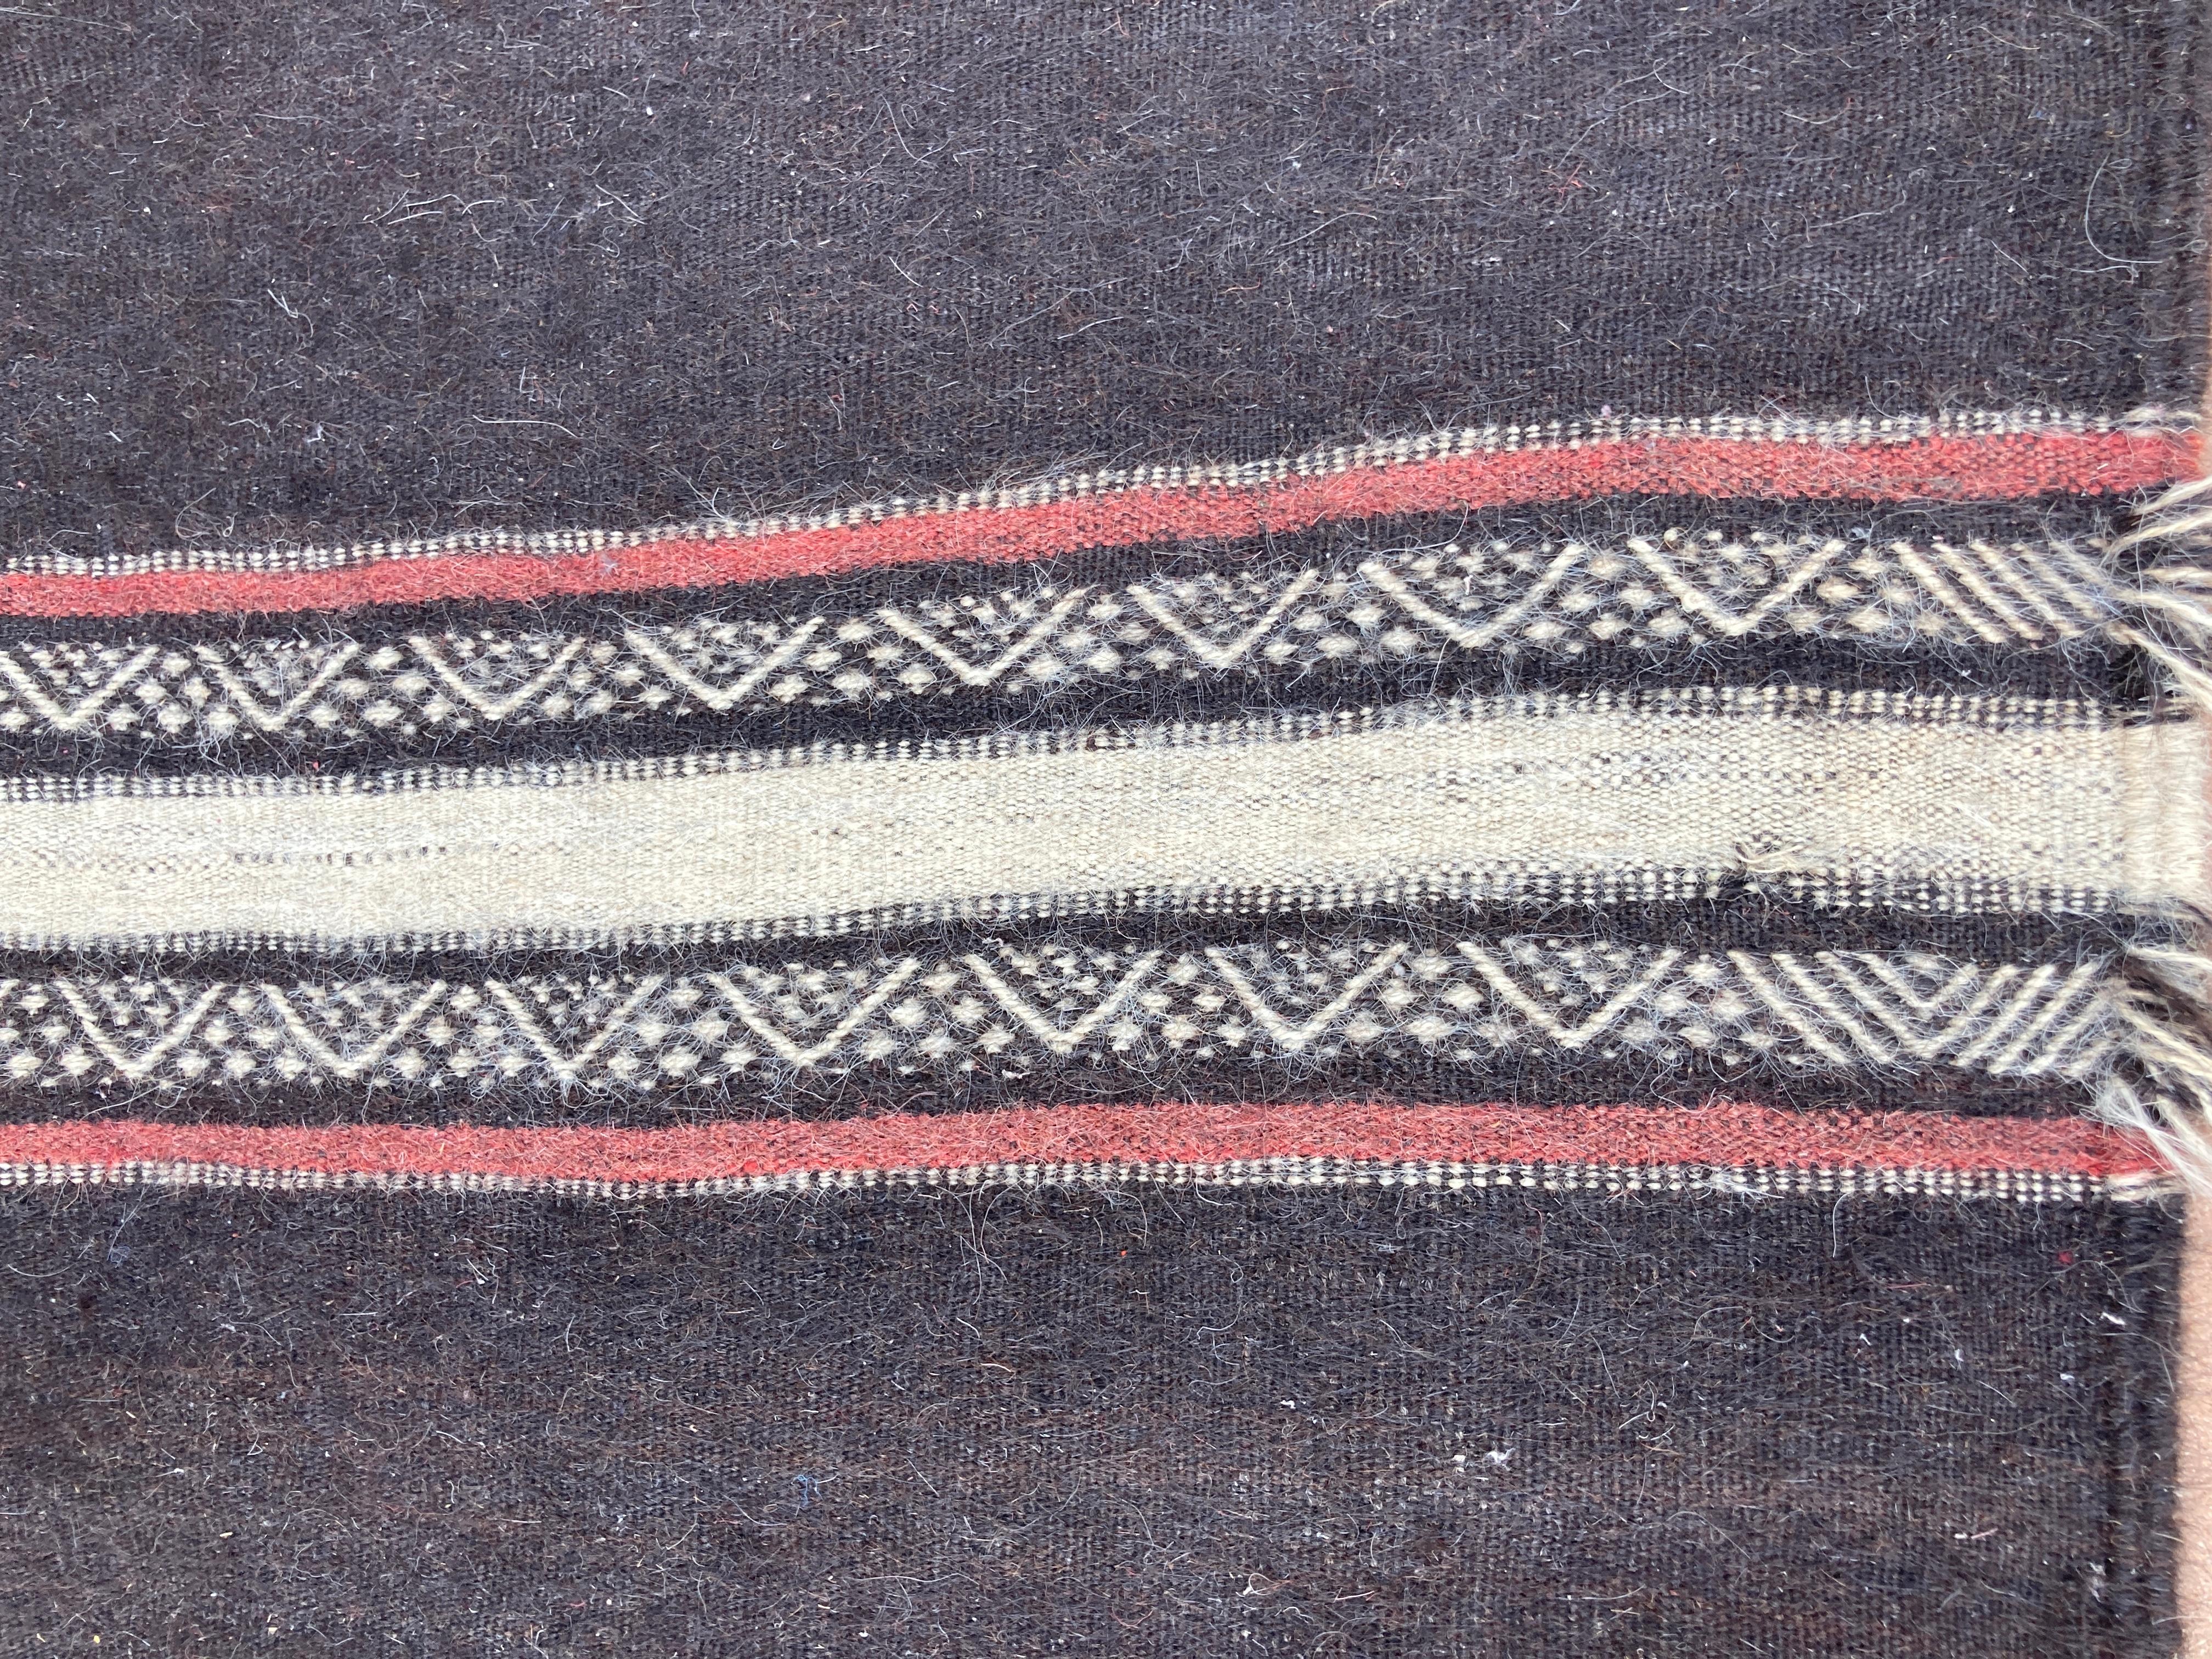 Moroccan Vintage Flat-Weave Black Camel Hair Tribal Rug For Sale 8